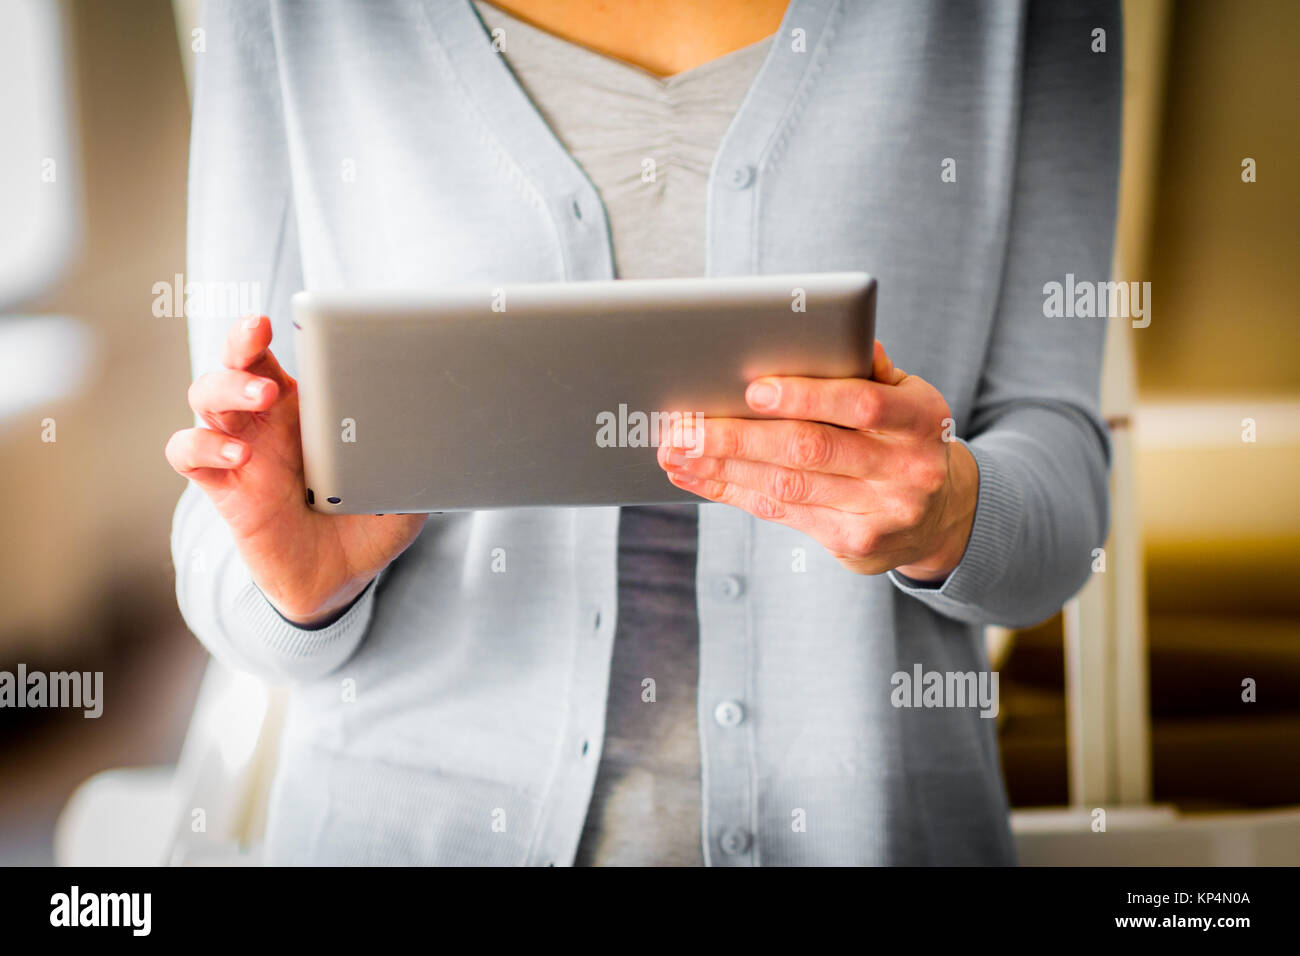 Woman using digital tablet. Stock Photo